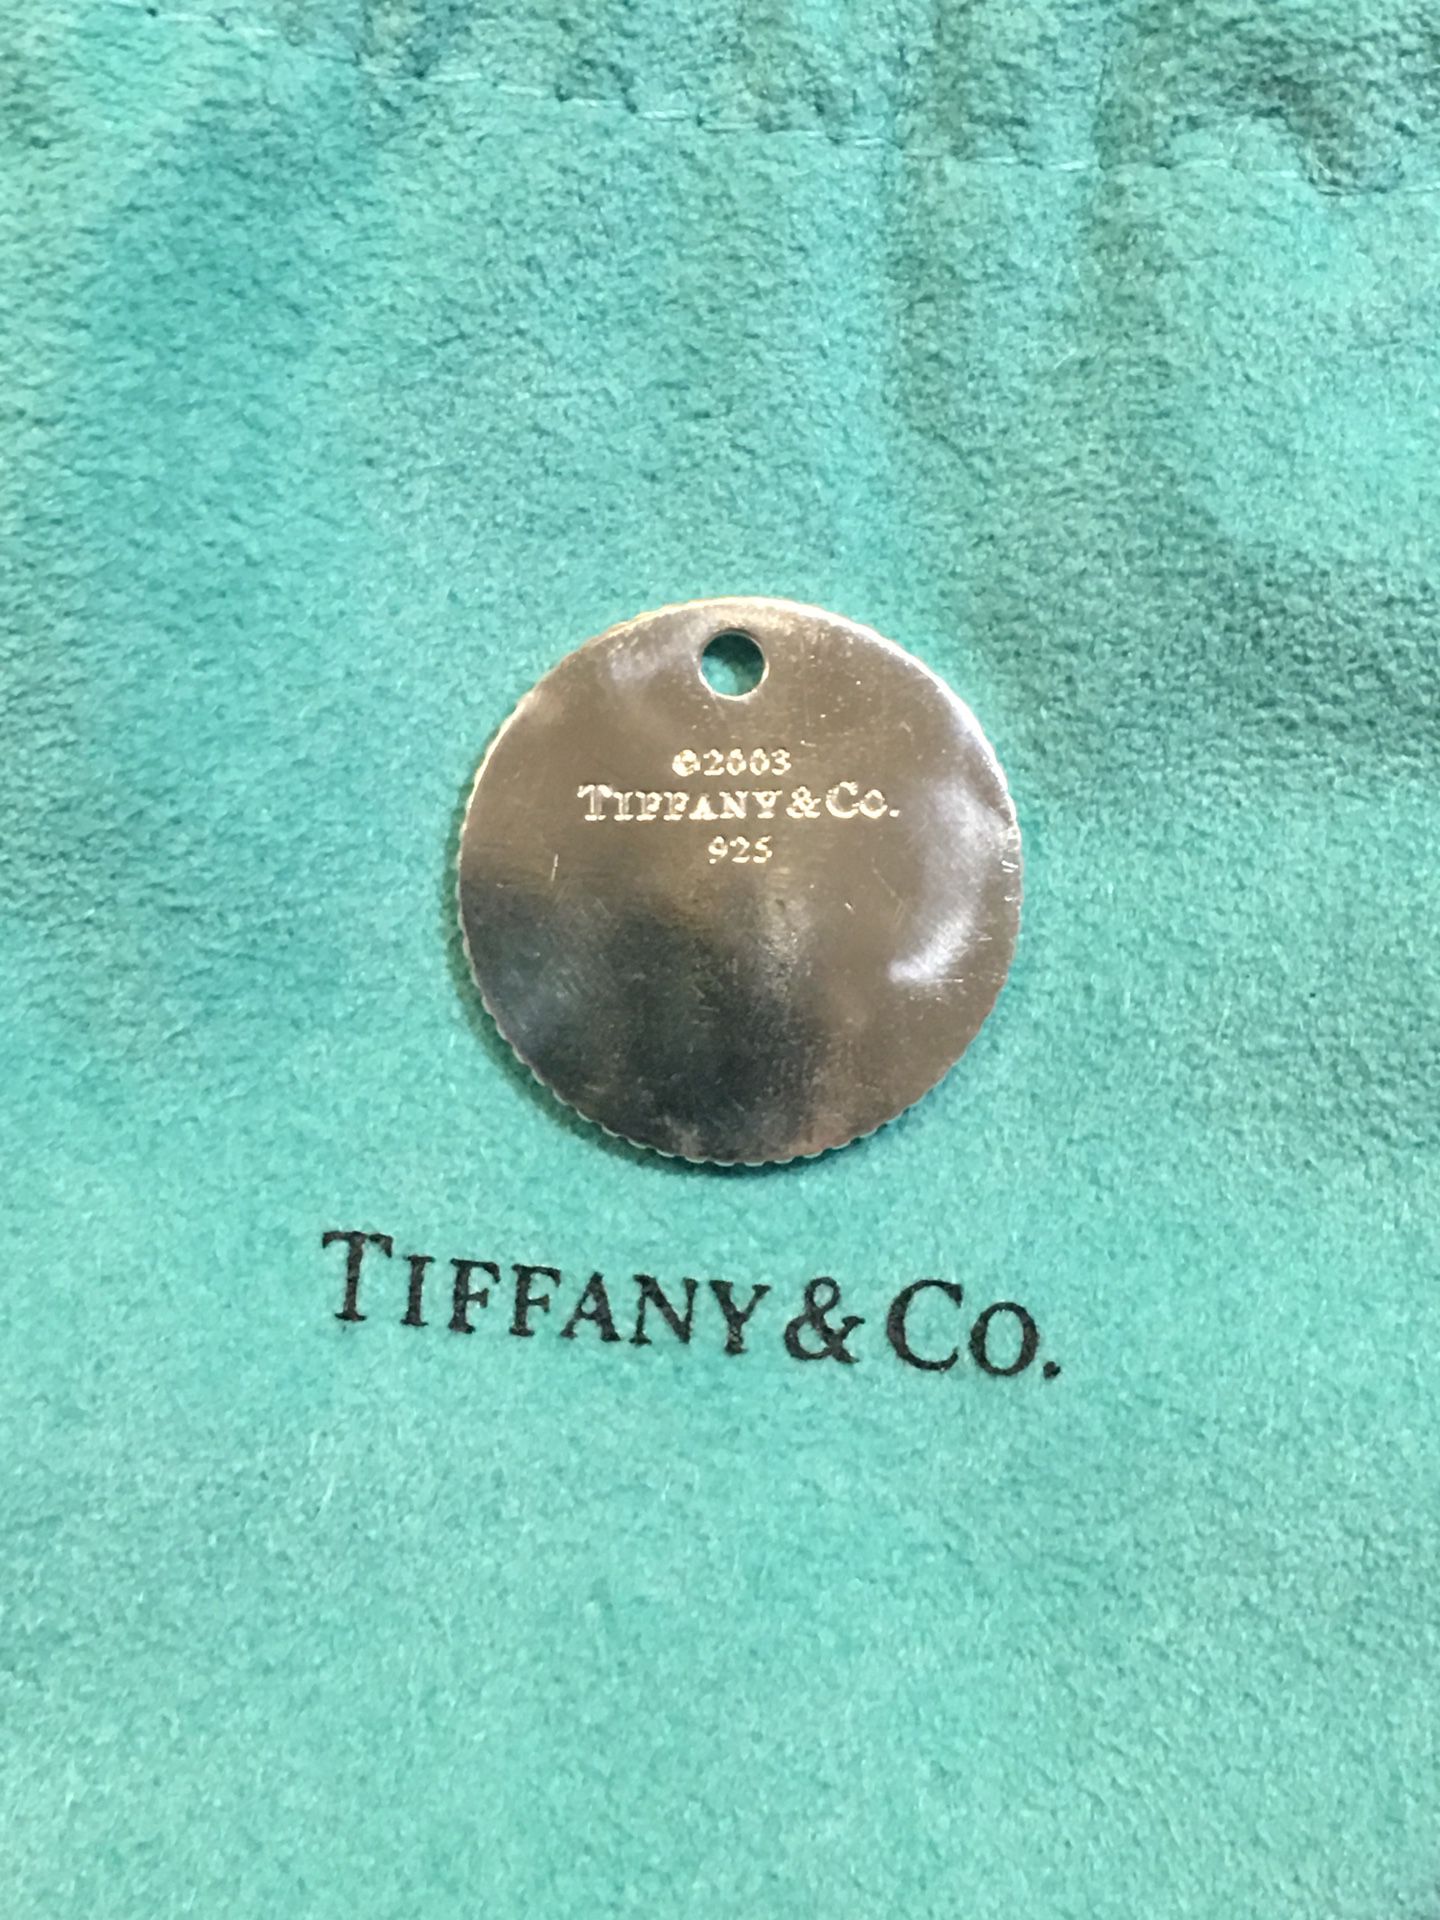 RARE Tiffany & co 2003 coin edge pendant